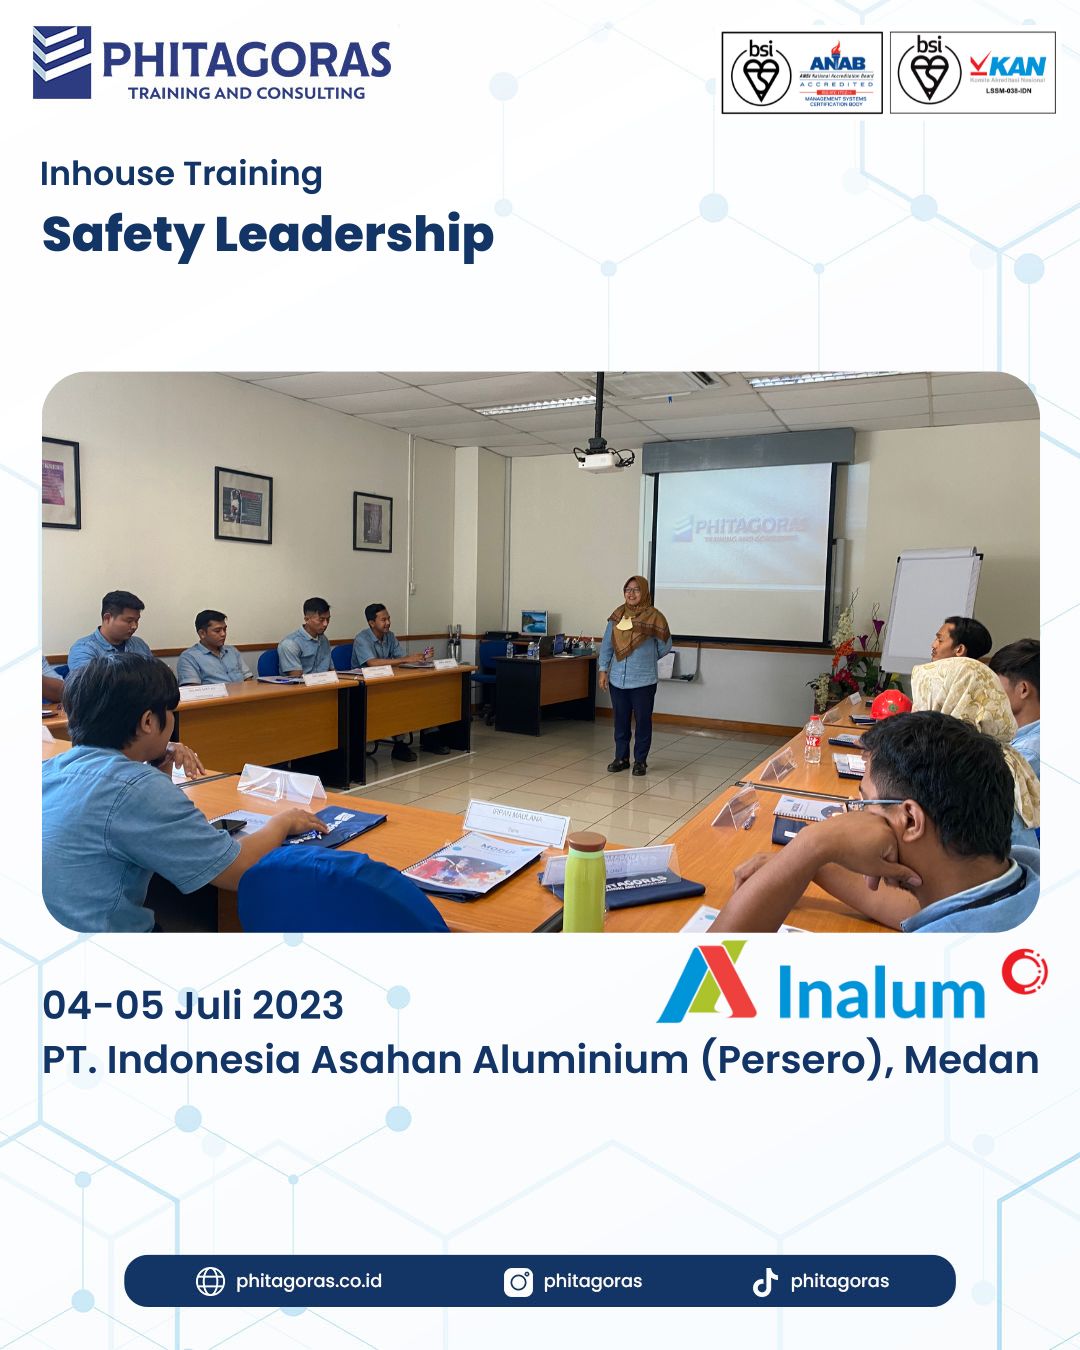 Inhouse Training Safety Leadership - PT. Indonesia Asahan Aluminium (Persero) Batch 8